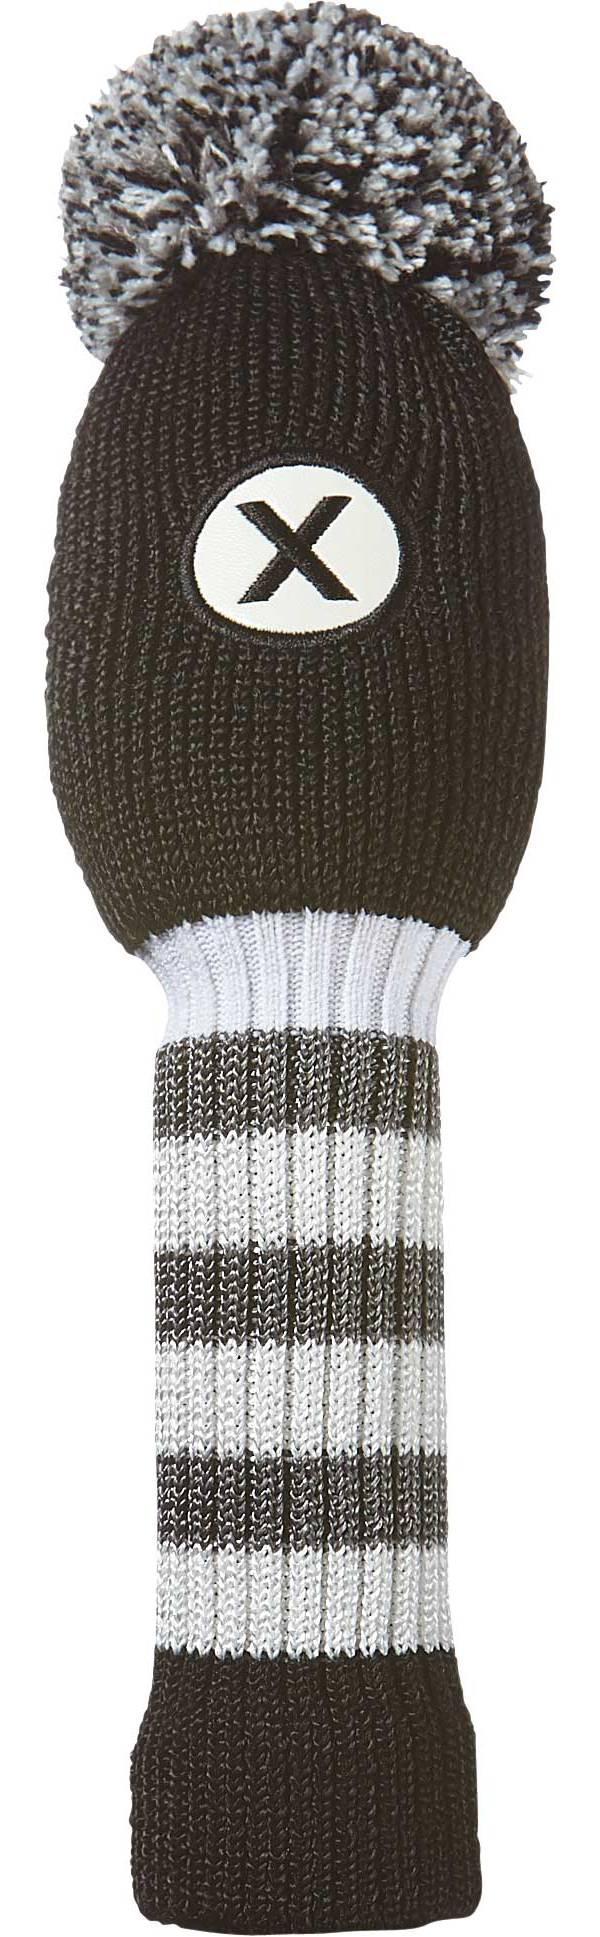 Maxfli Vintage Knit Hybrid Headcover product image